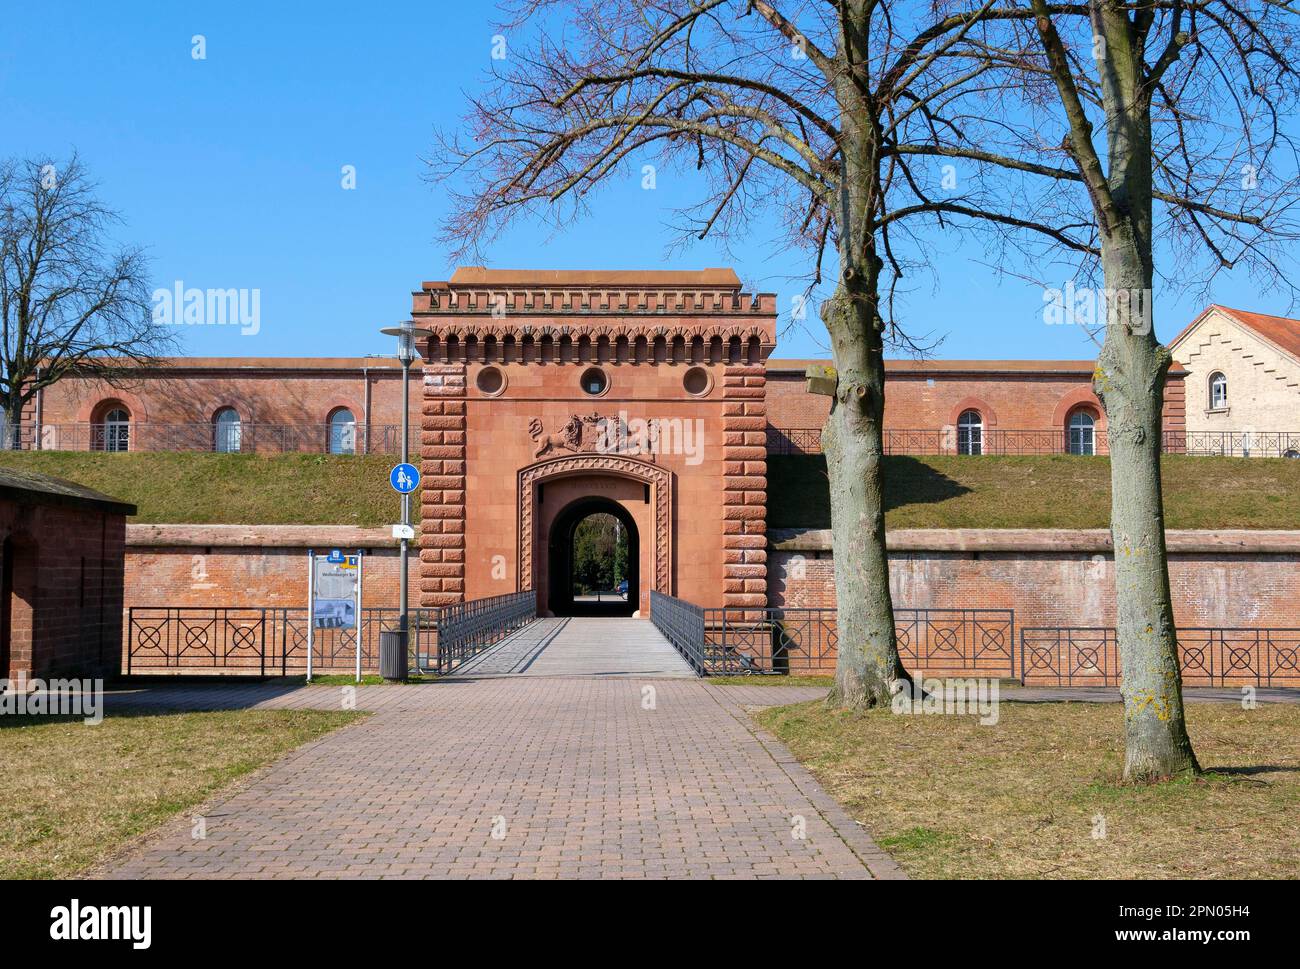 Forteresse de Germersheim, forteresse royale bavaroise, porte de Weissenburg, Germersheim, Rhénanie-Palatinat, Allemagne Banque D'Images